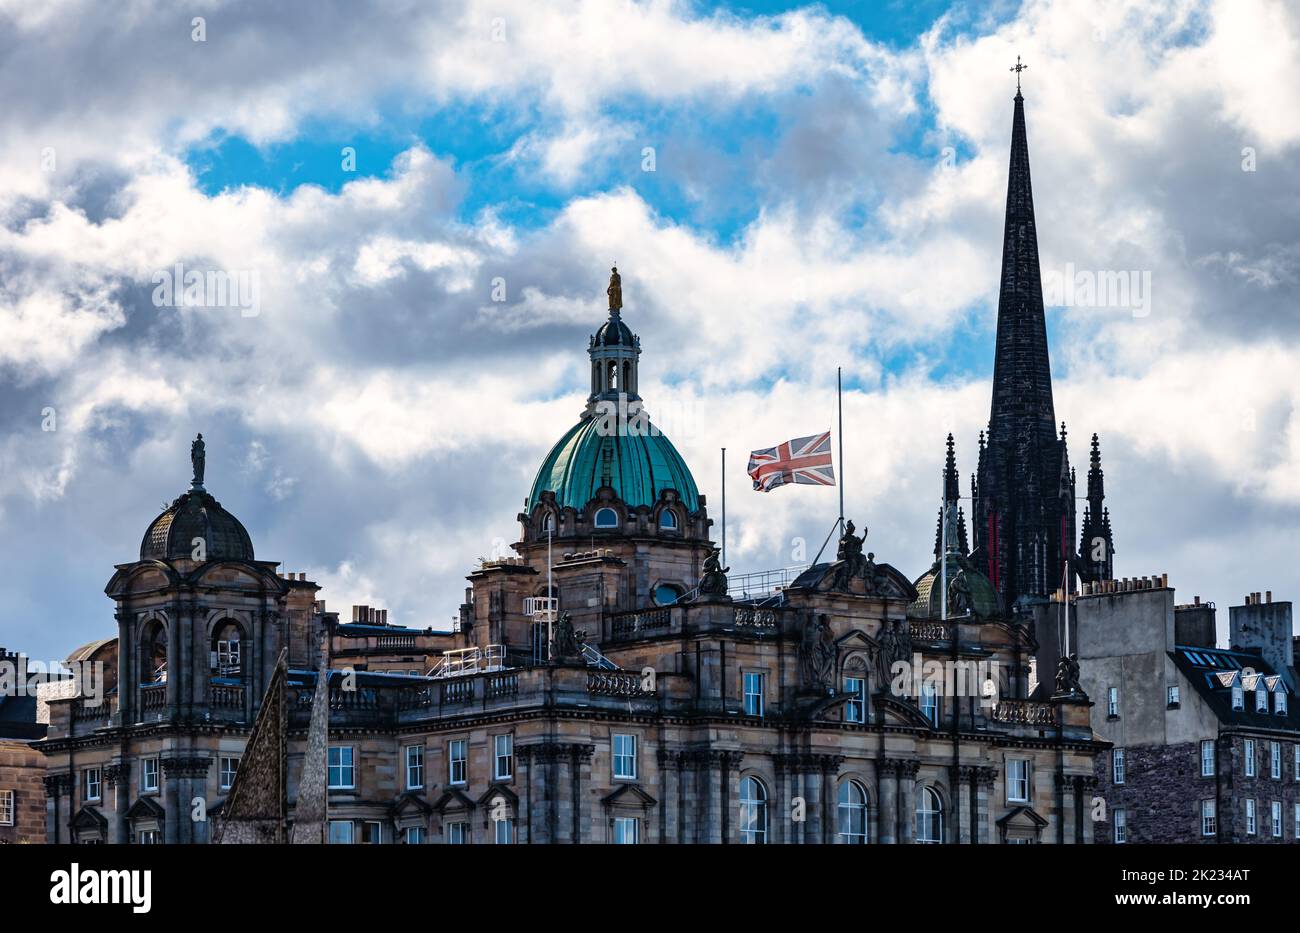 Union Jack flag flying at half mast after death of HM Queen Elizabeth II on former Bank of Scotland headquarters, Edinburgh, Scotland, UK Stock Photo